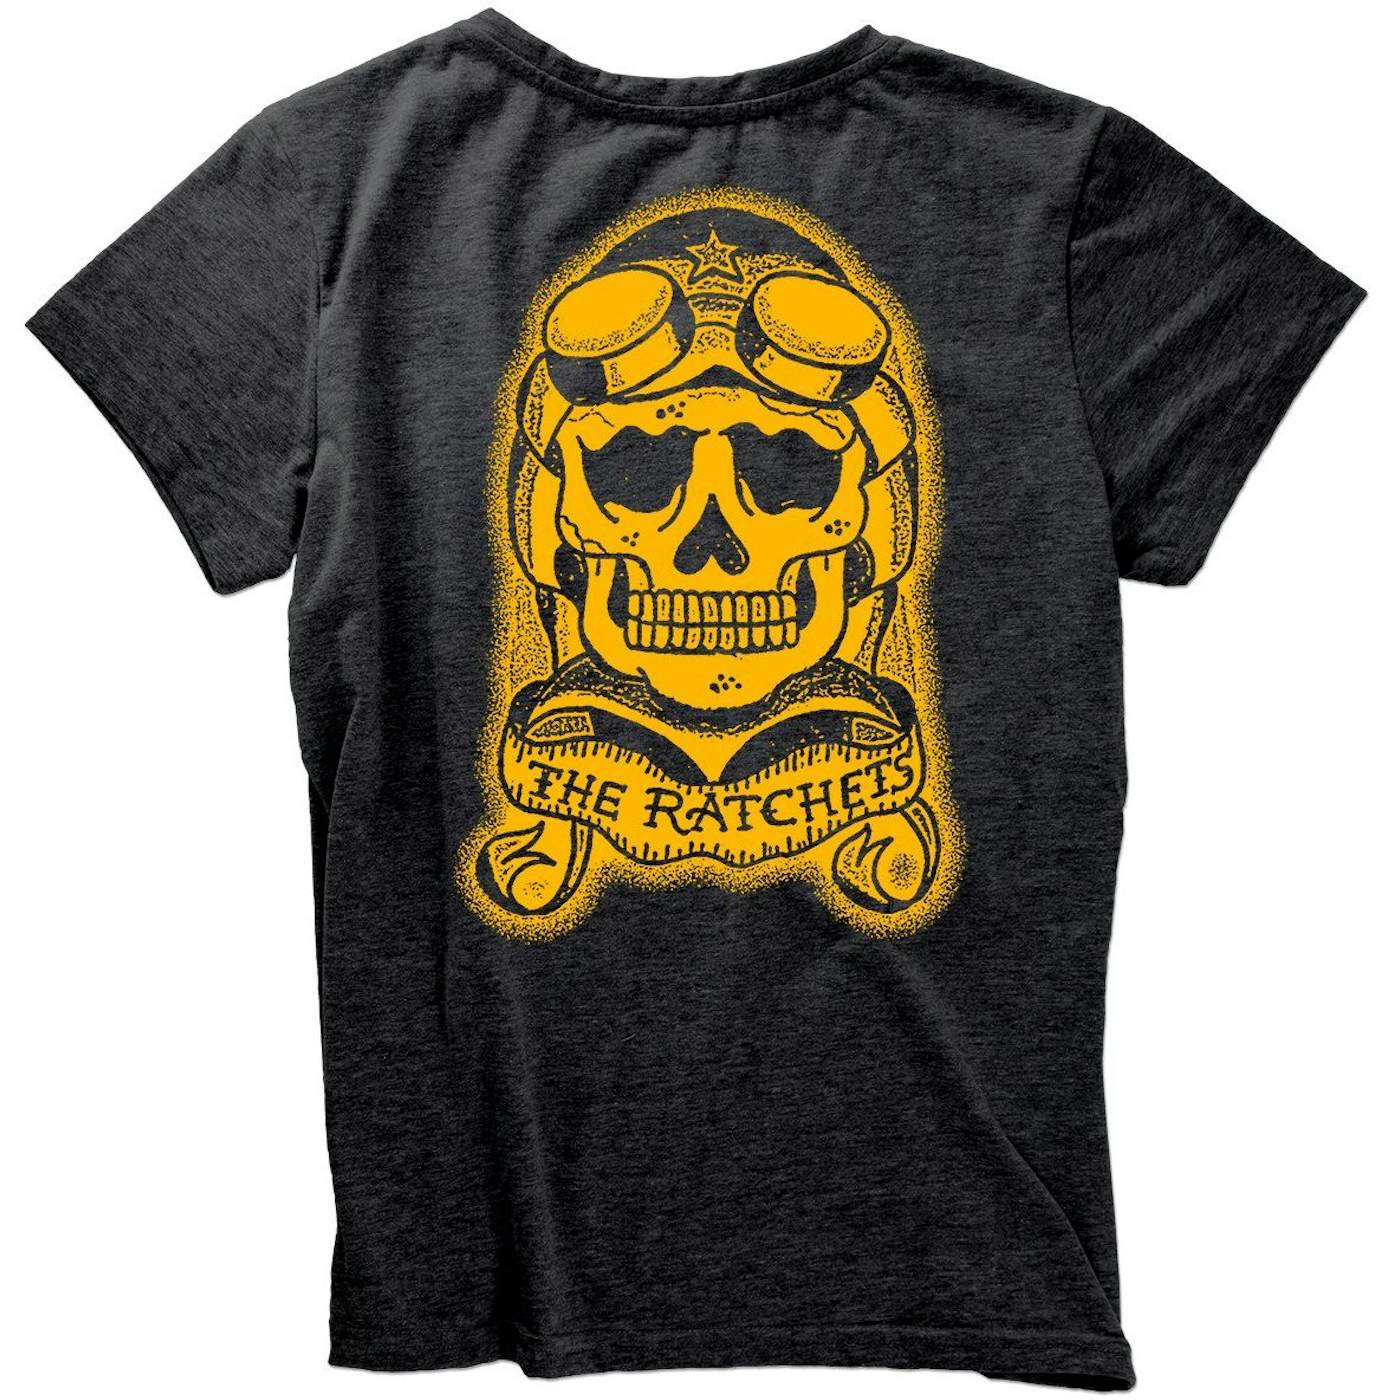 The Ratchets - Skull Logo - V-Neck - T-shirt - Fitted